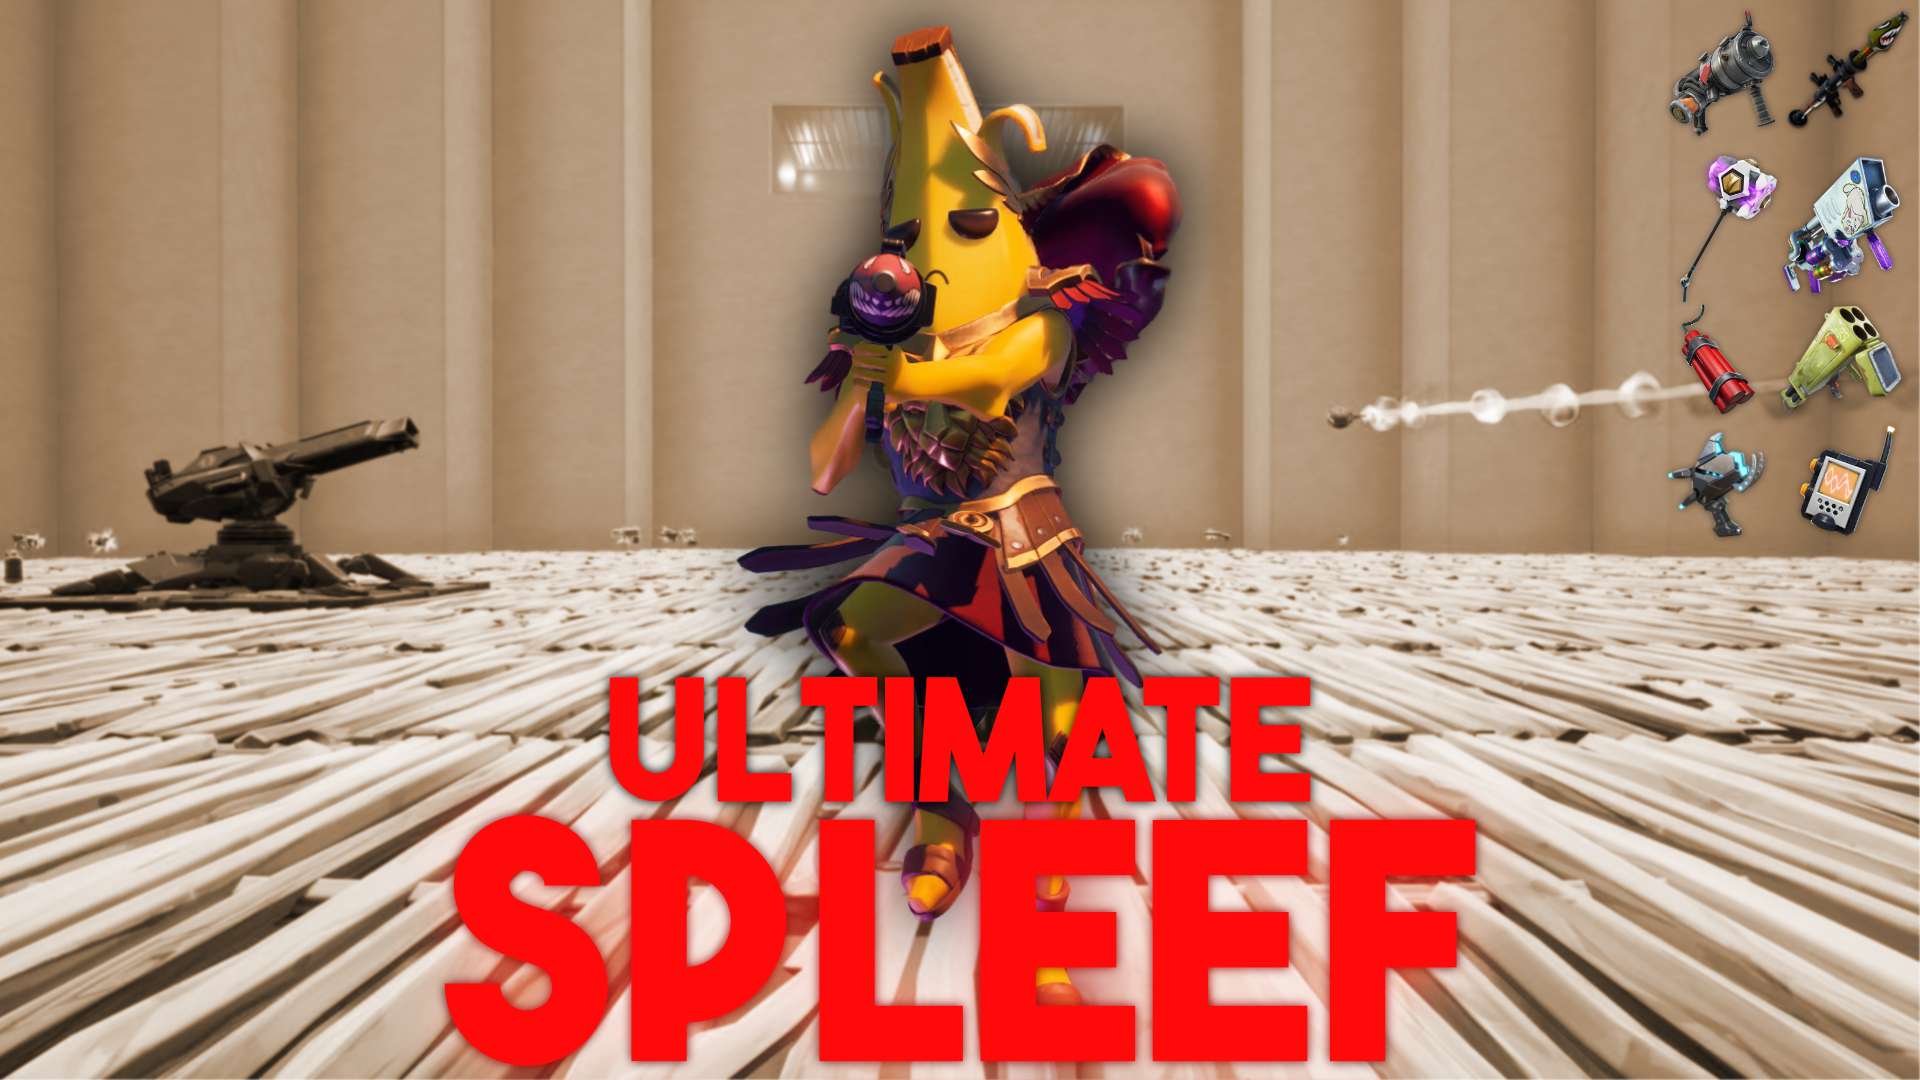 ULTIMATE SPLEEF 💥 image 3